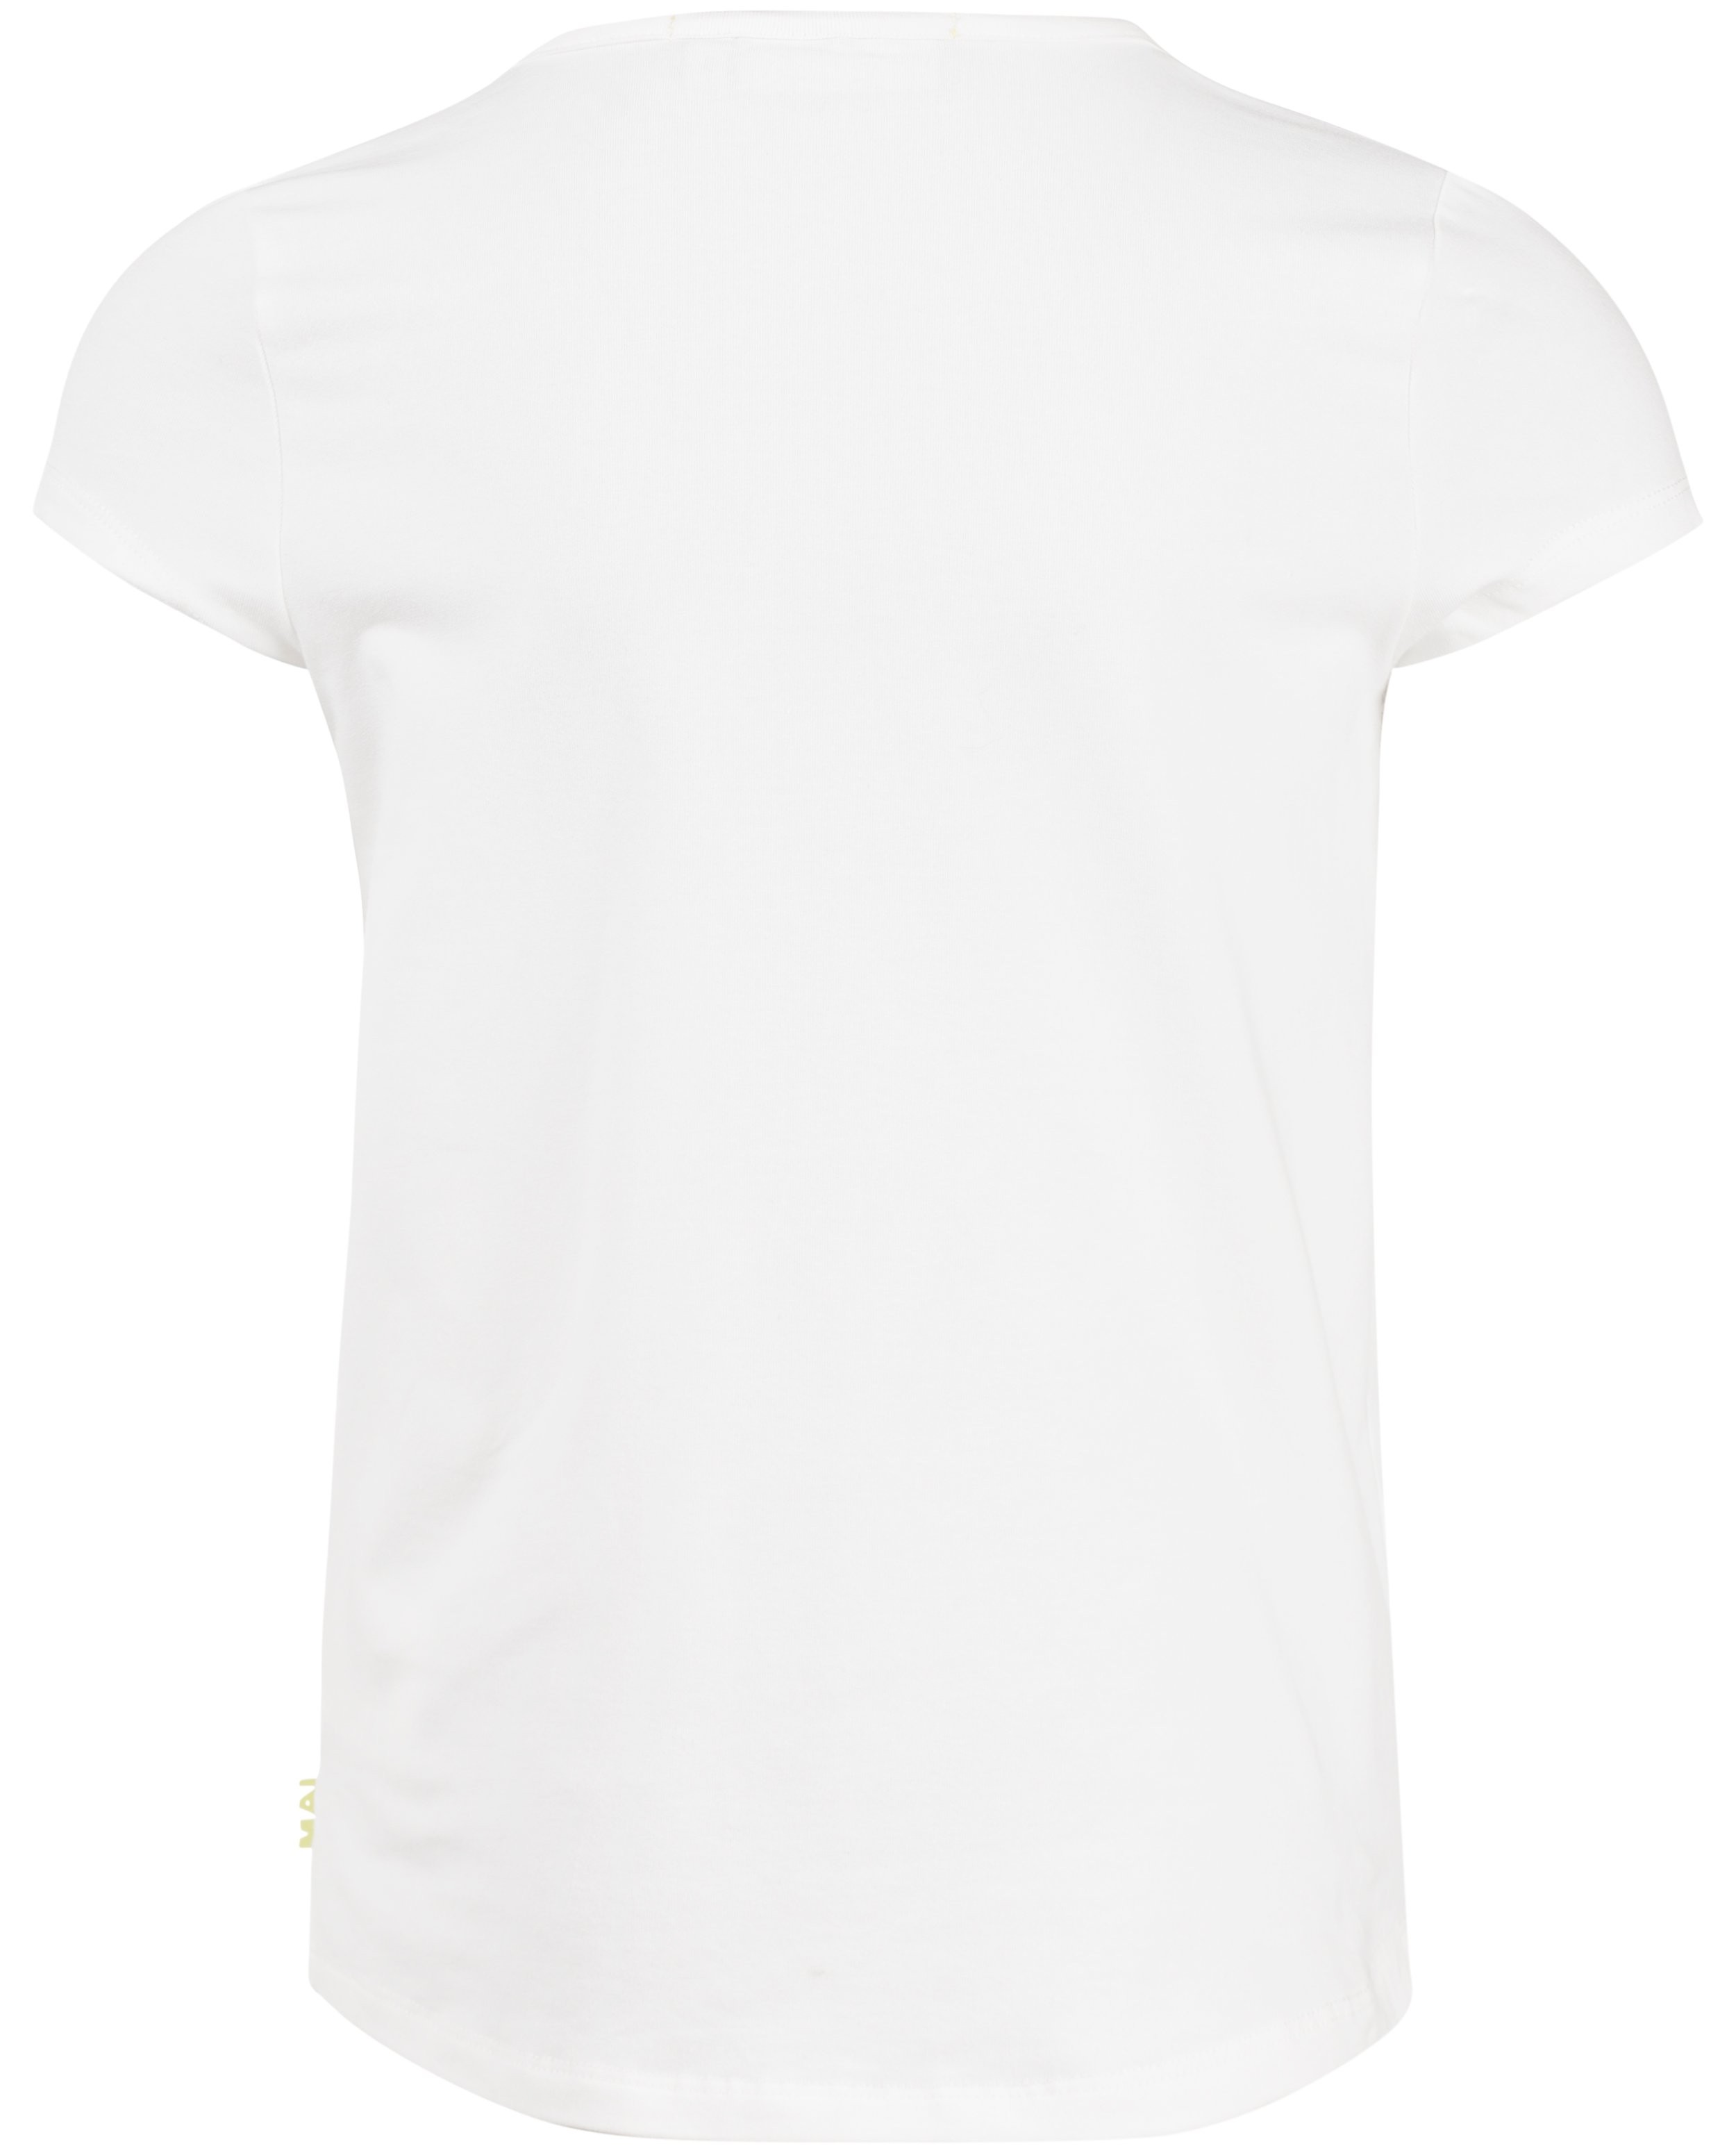 T-shirts - T-shirt blanc, coton bio